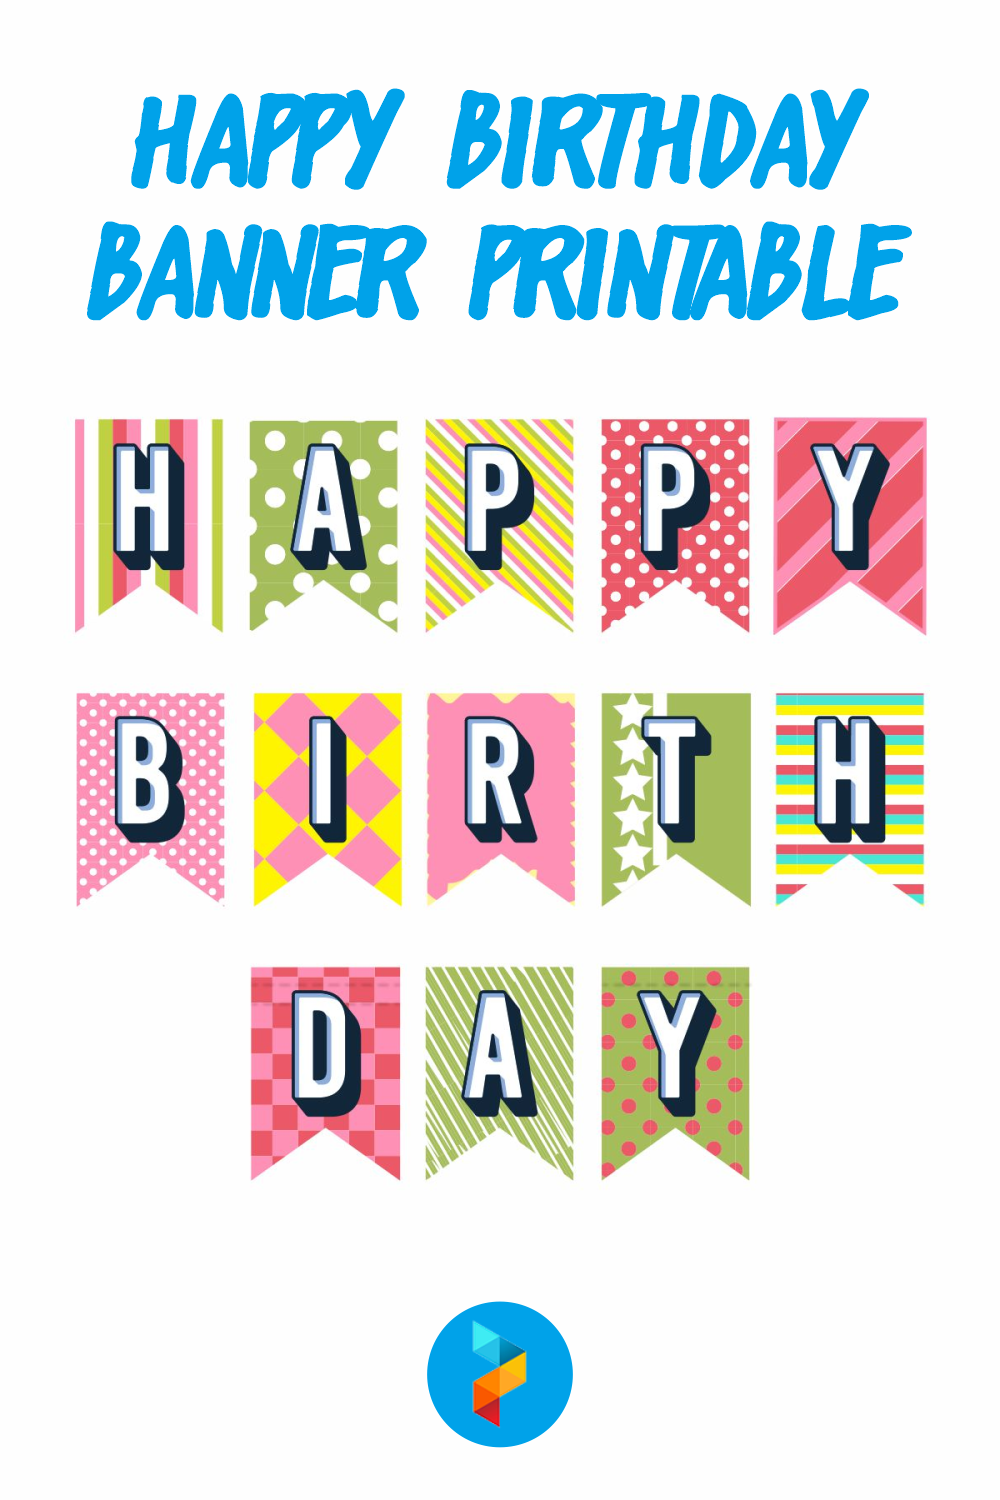 Happy Birthday Banner Printable